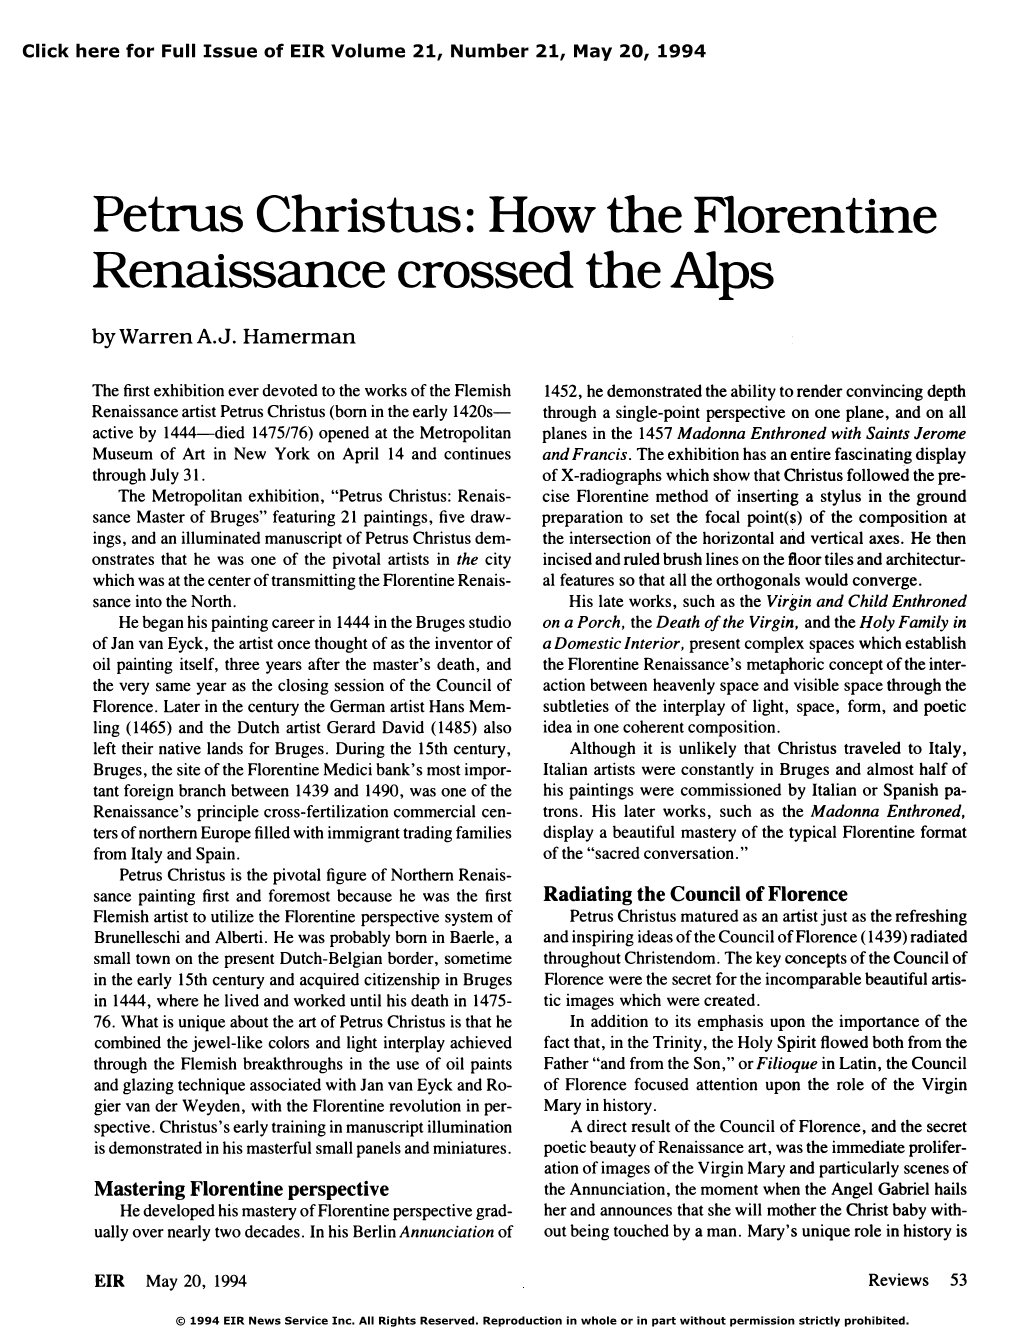 Petrus Christus: How the Florentine Renaissance Crossed Thealps